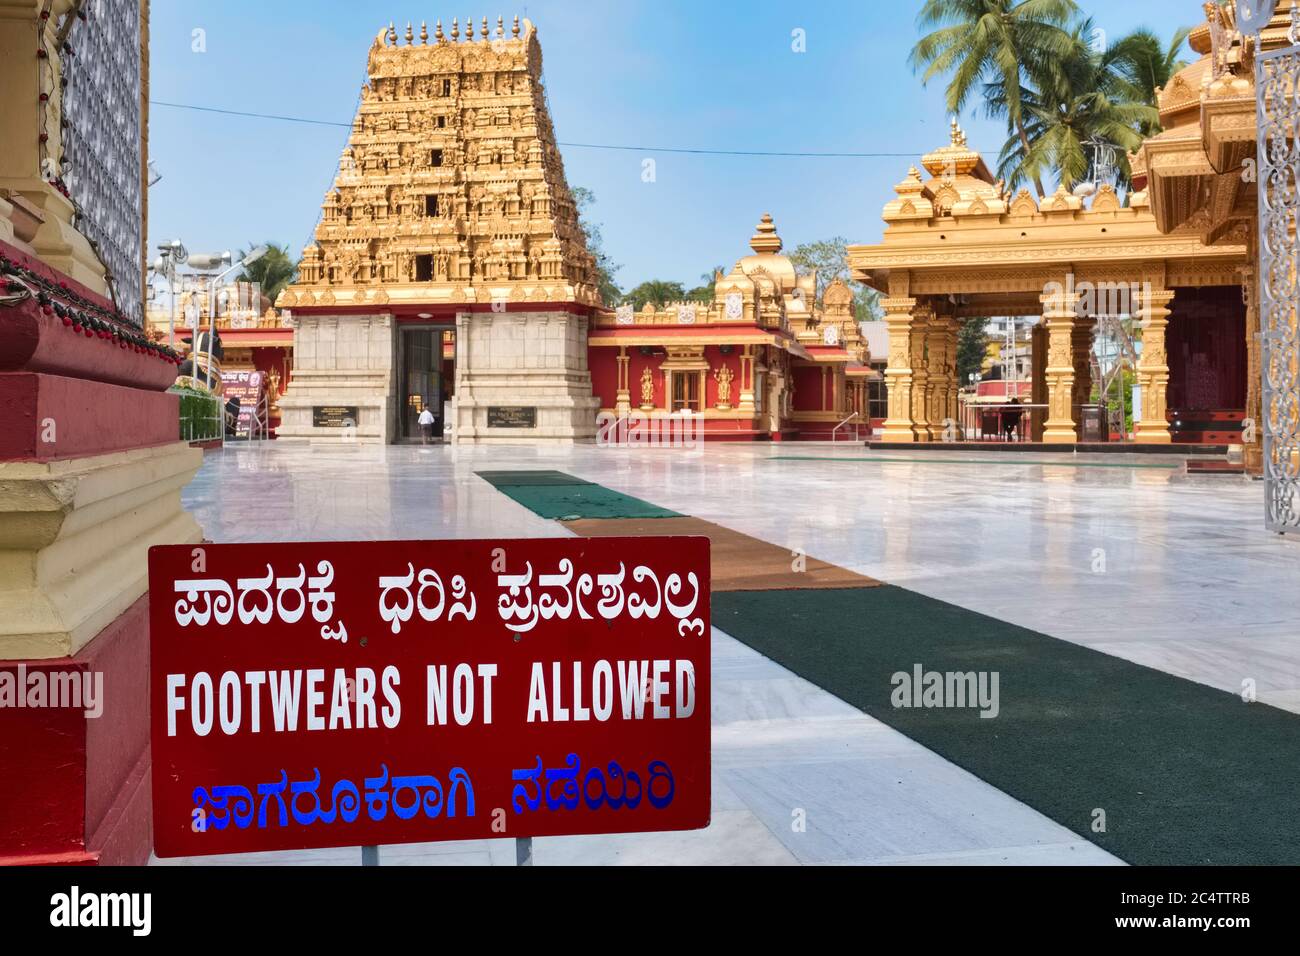 Sign at the entrance to Kudroli Shree Gokarnanatheshwara Temple, Mangalore, Karnataka, India, reminding footwear not being allowed in the premises Stock Photo